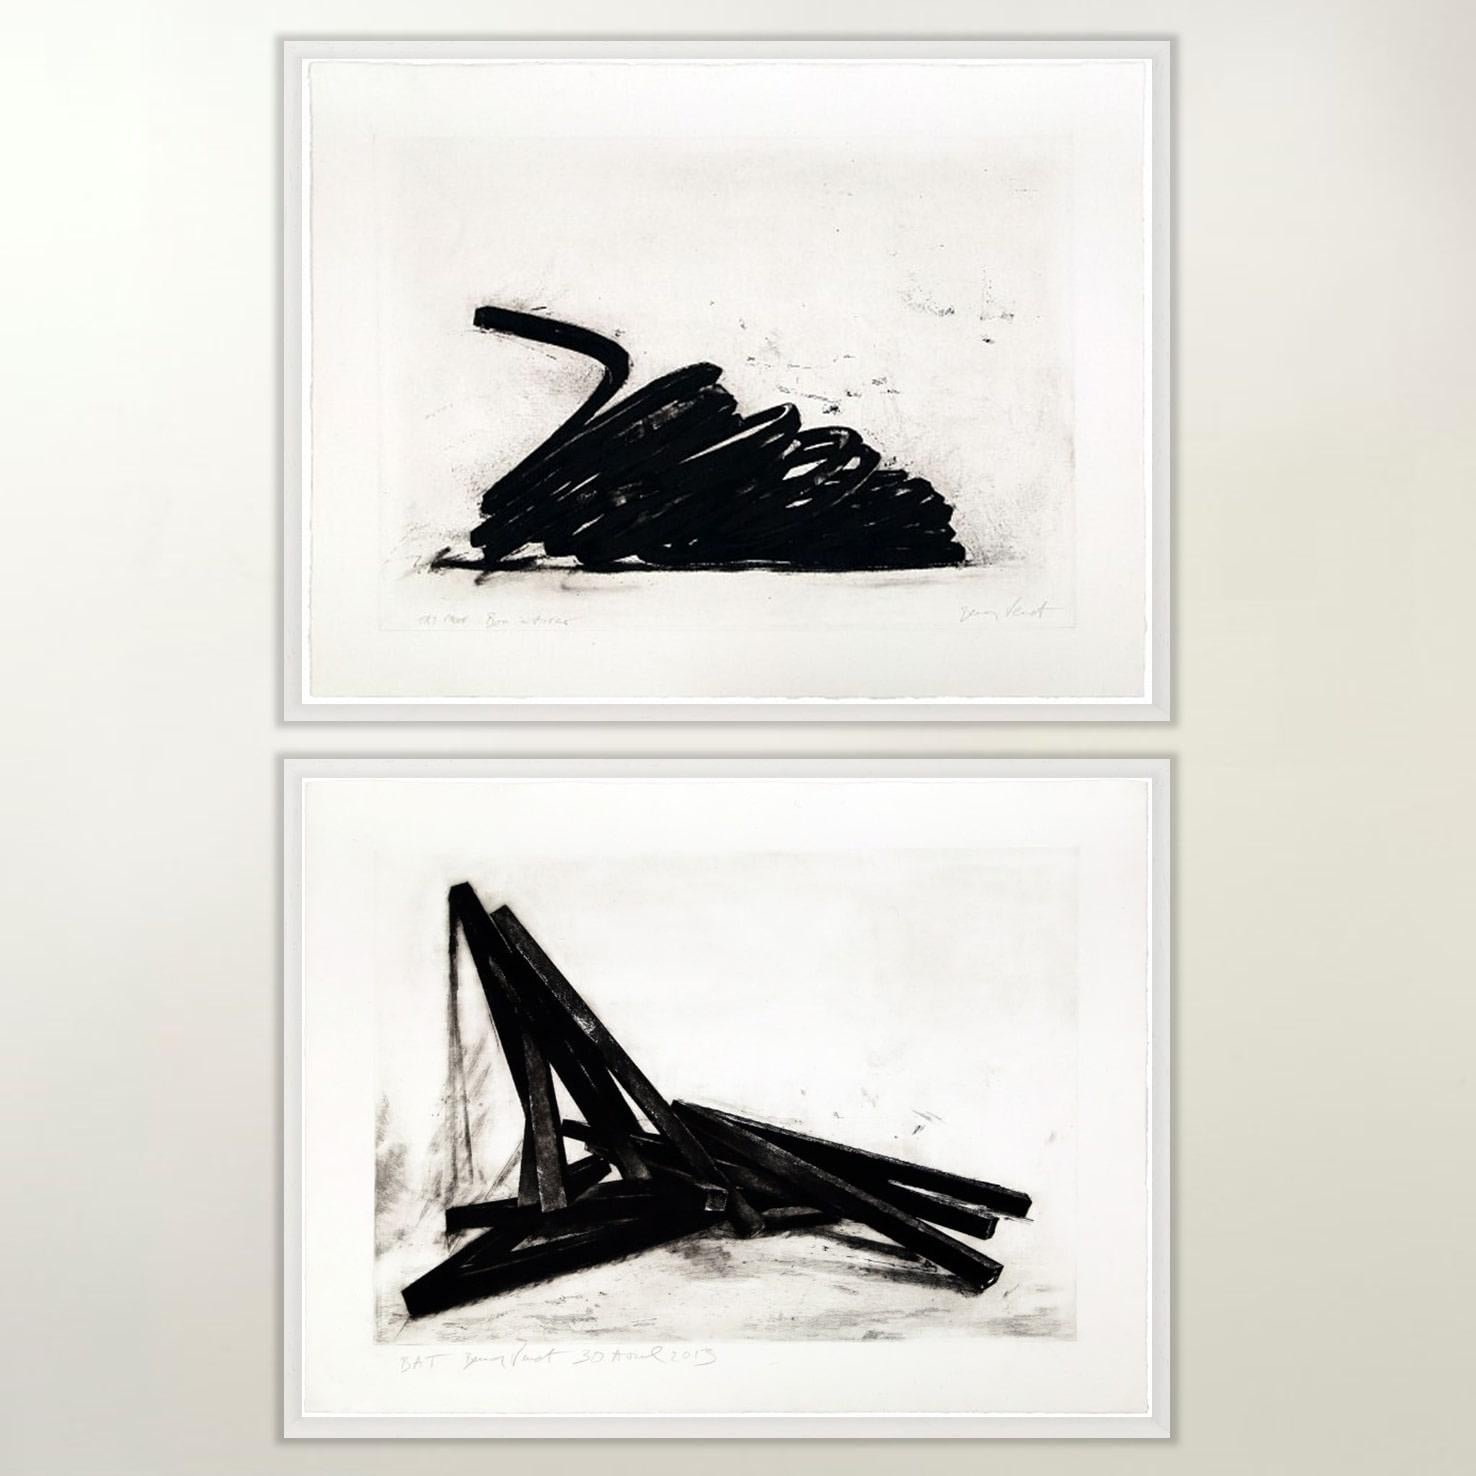 Bernar Venet Figurative Print - Effondrement - Contemporary, 21st Century, Etching, Black, White, Edition